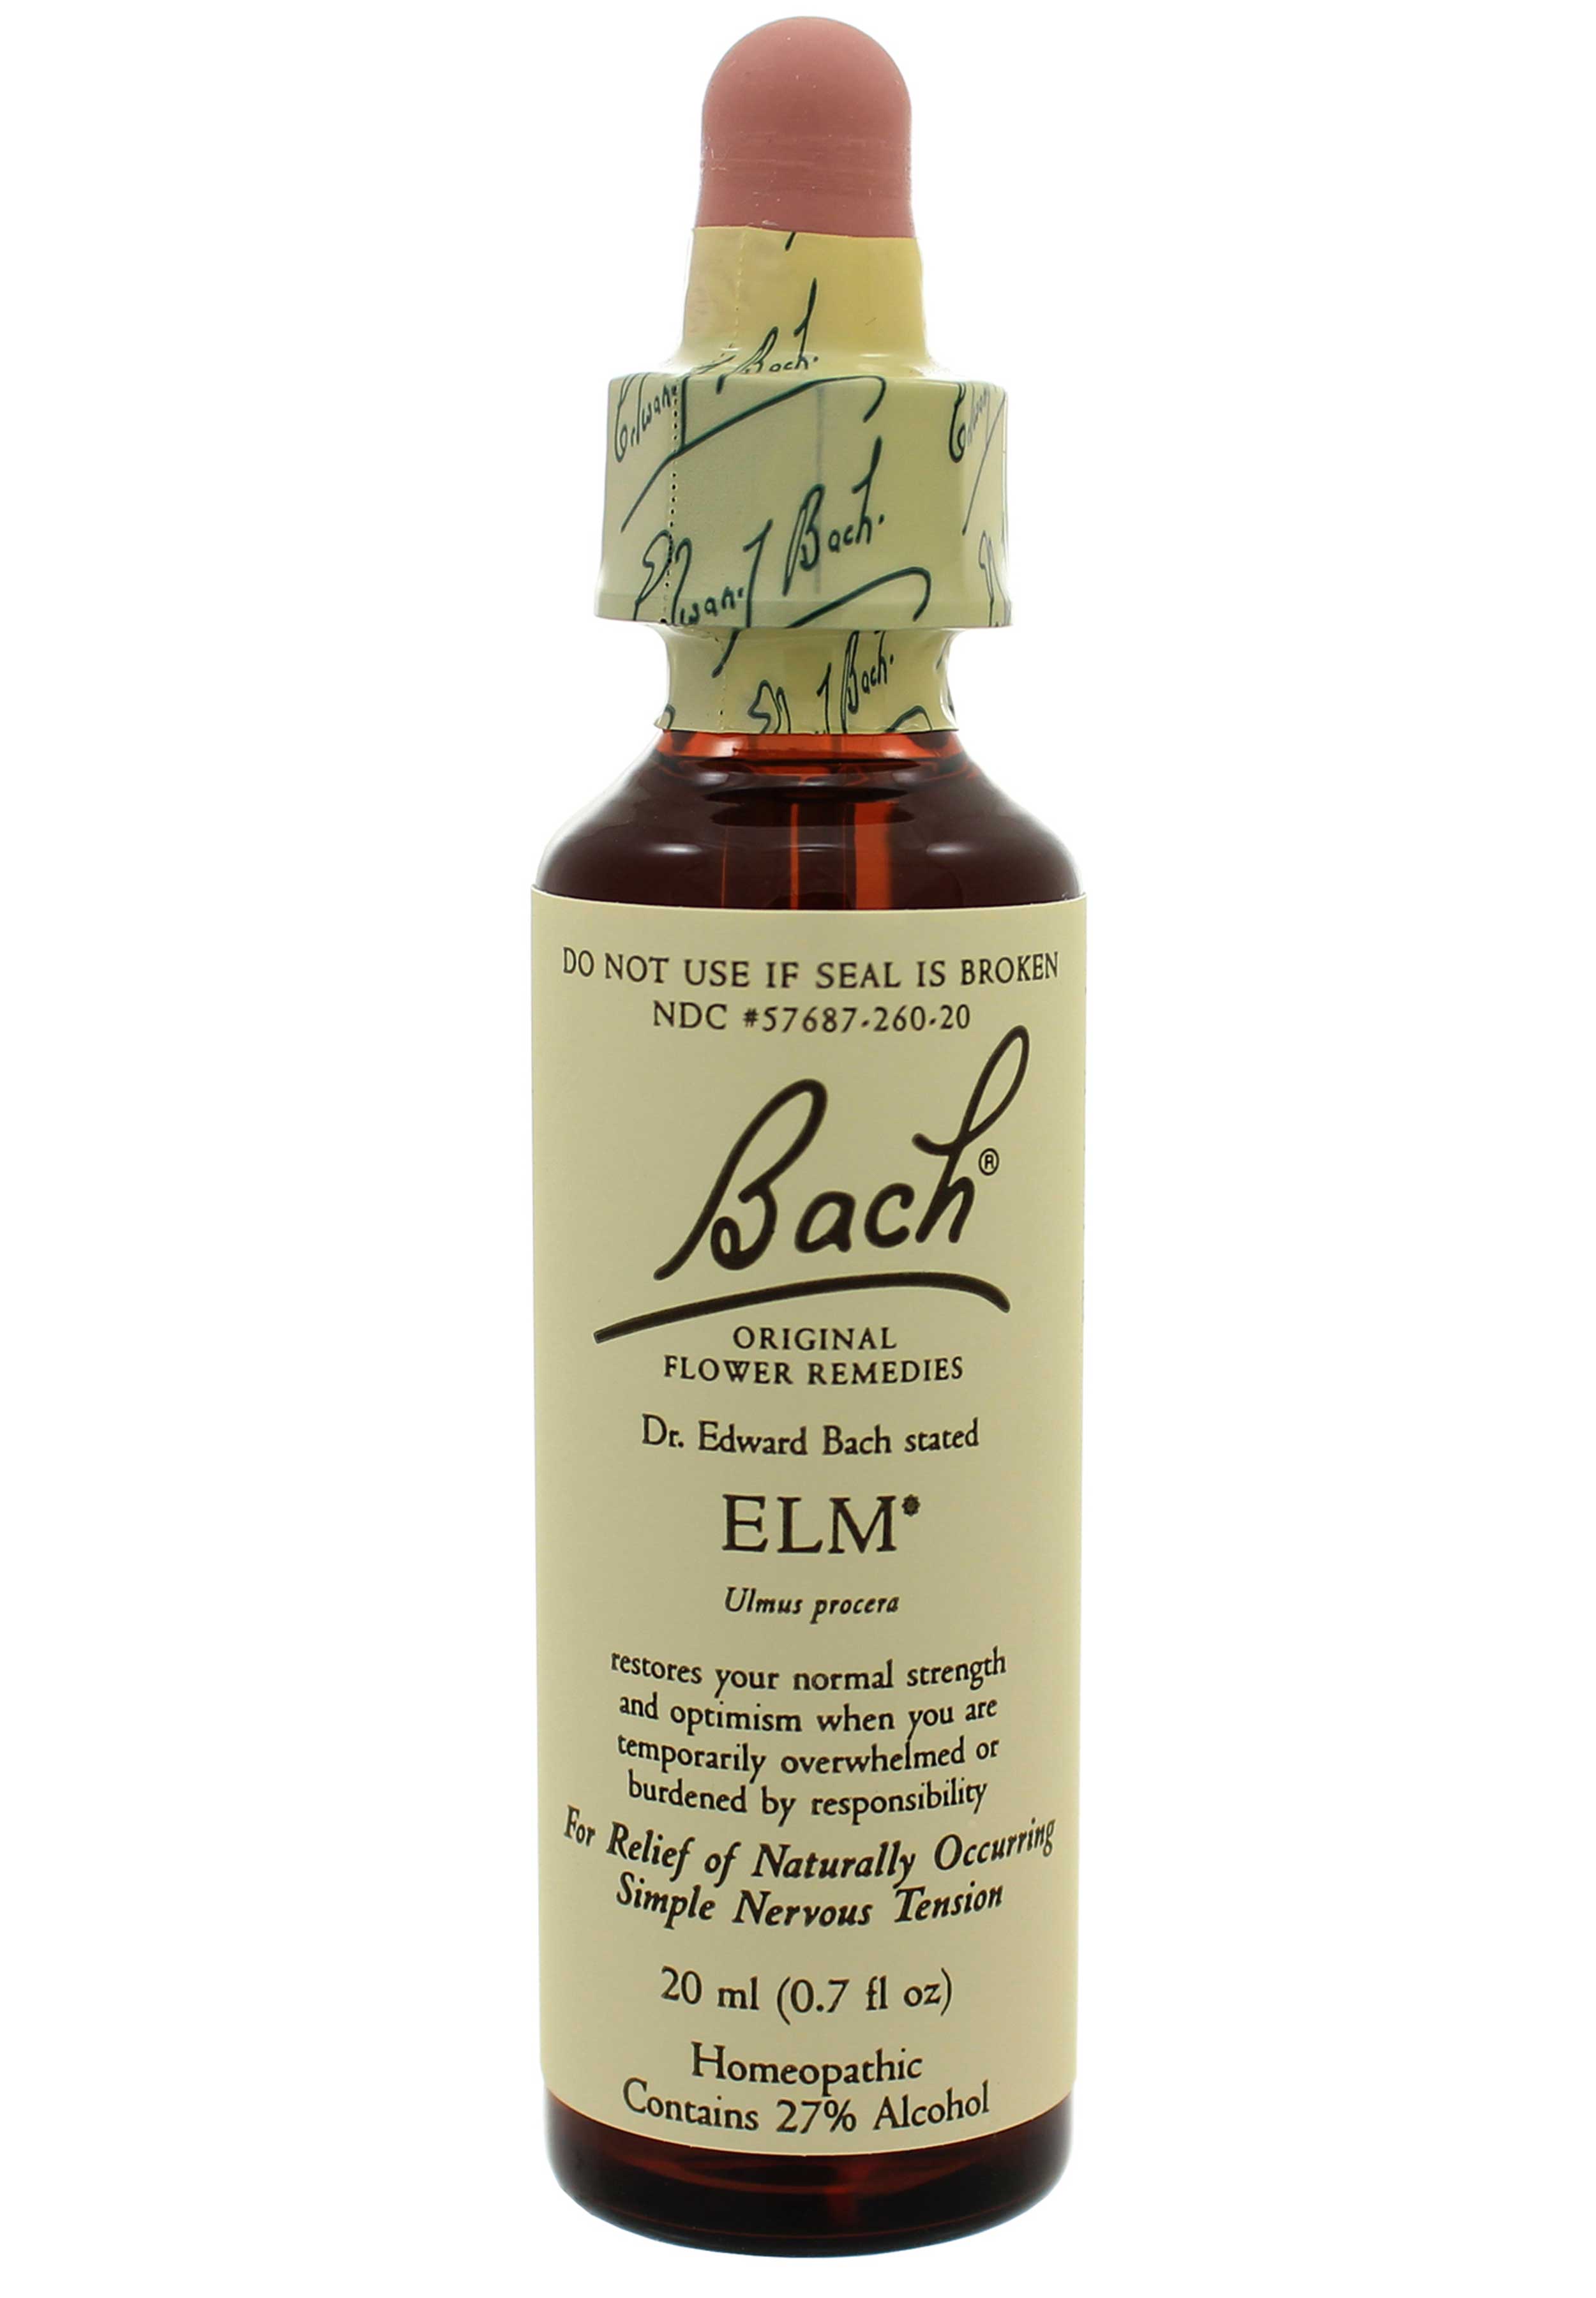 Bach Flower Remedies Elm